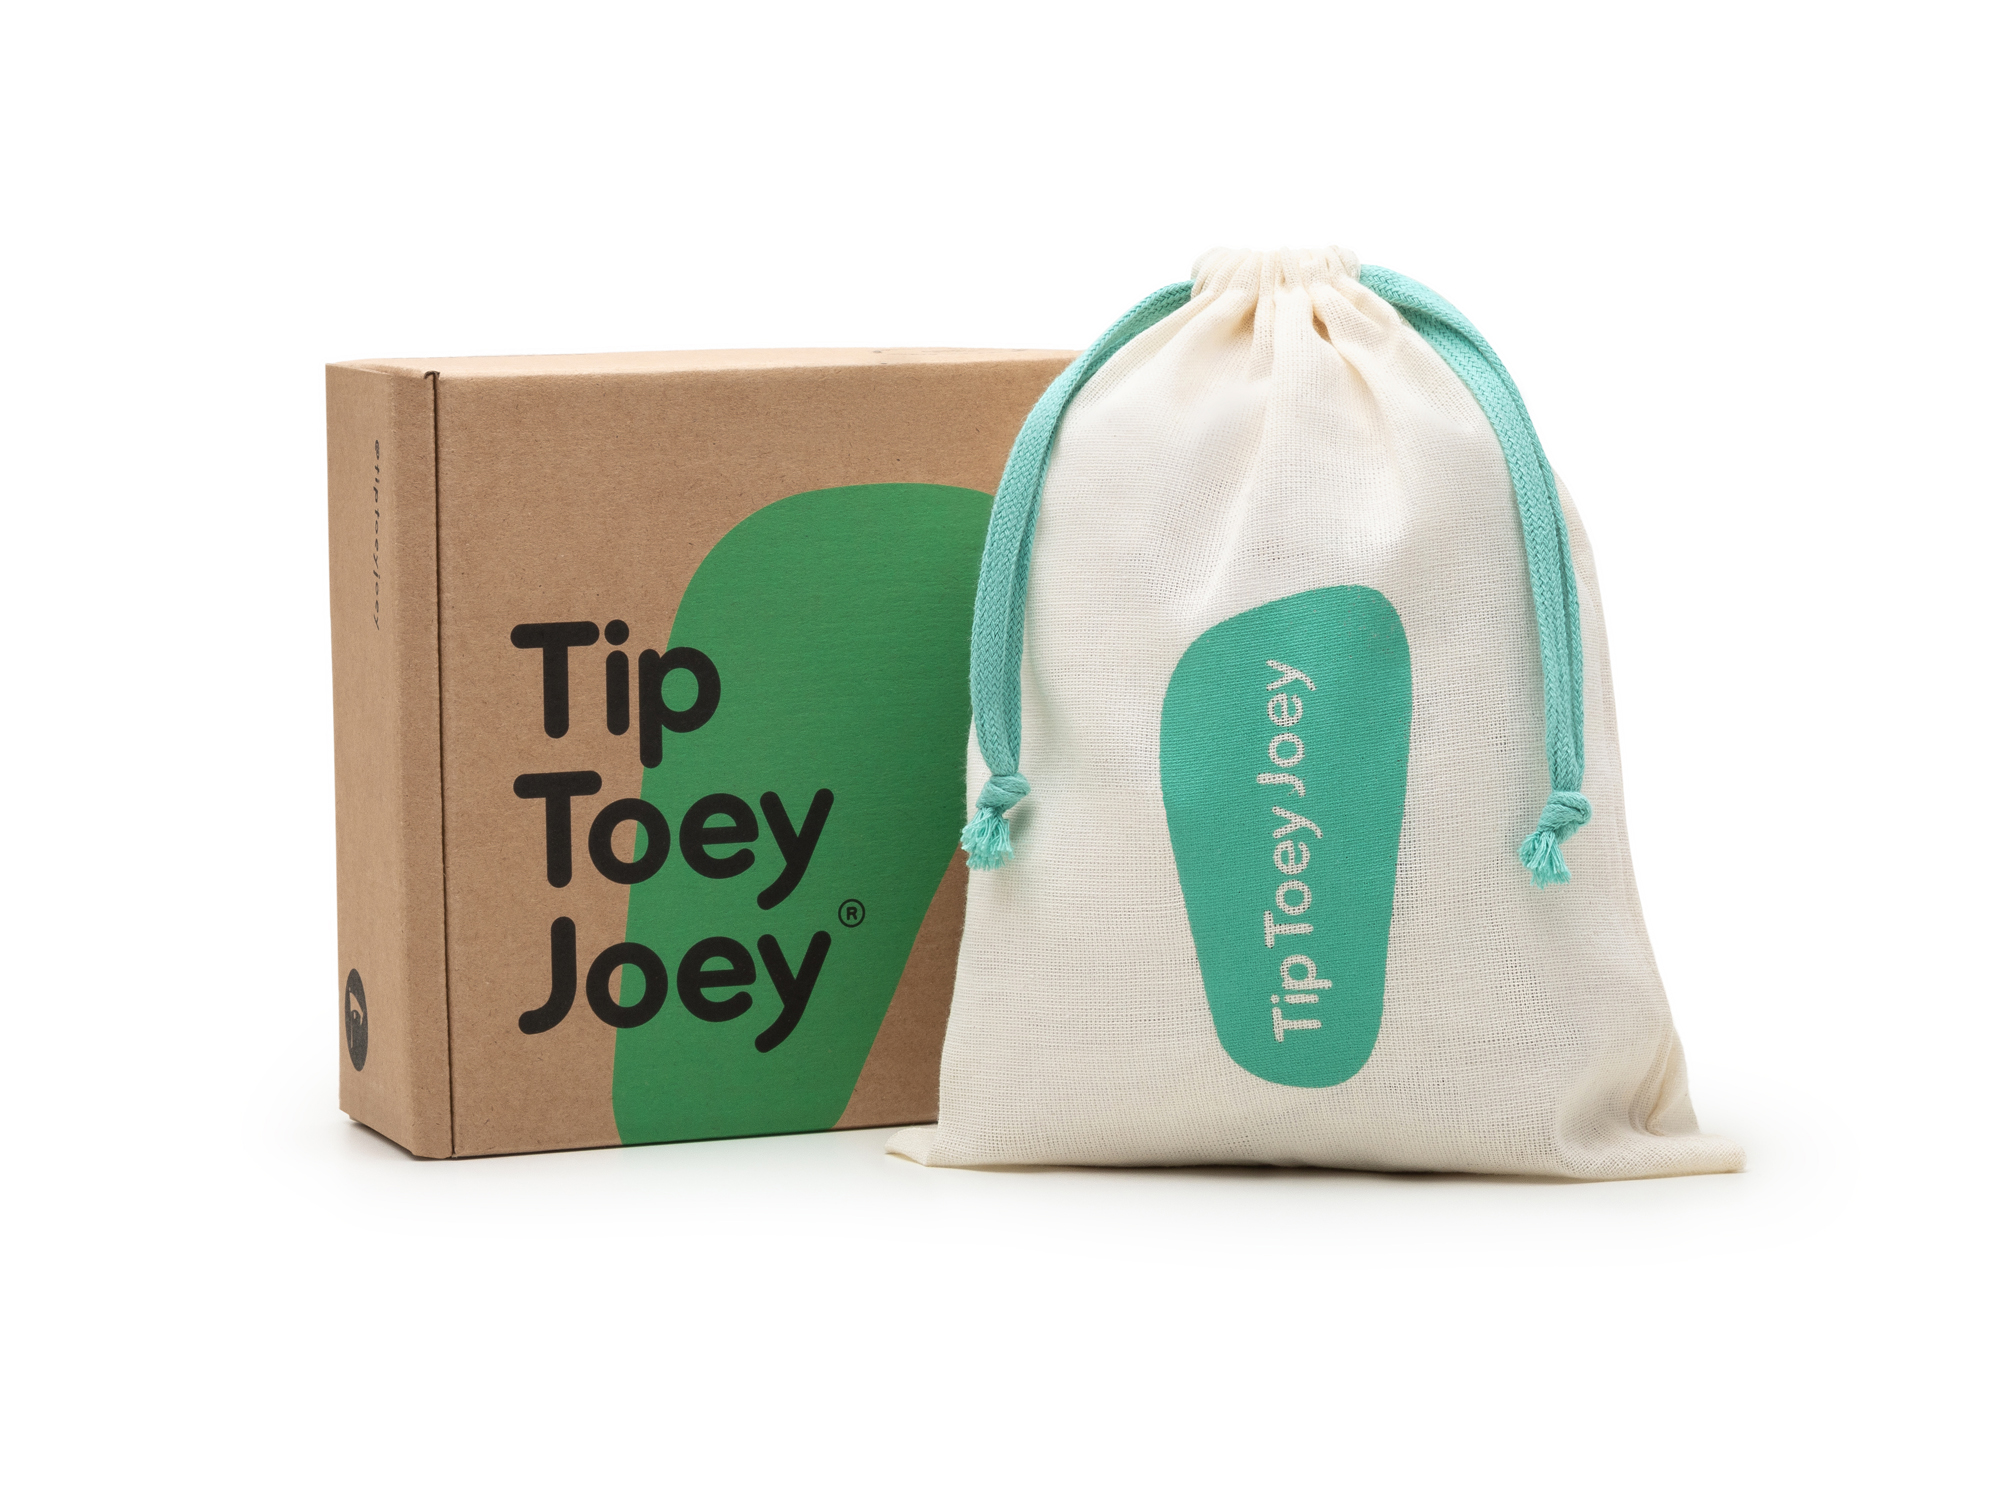 UP & GO Sneakers for Boys Ollie | Tip Toey Joey - Australia - 6